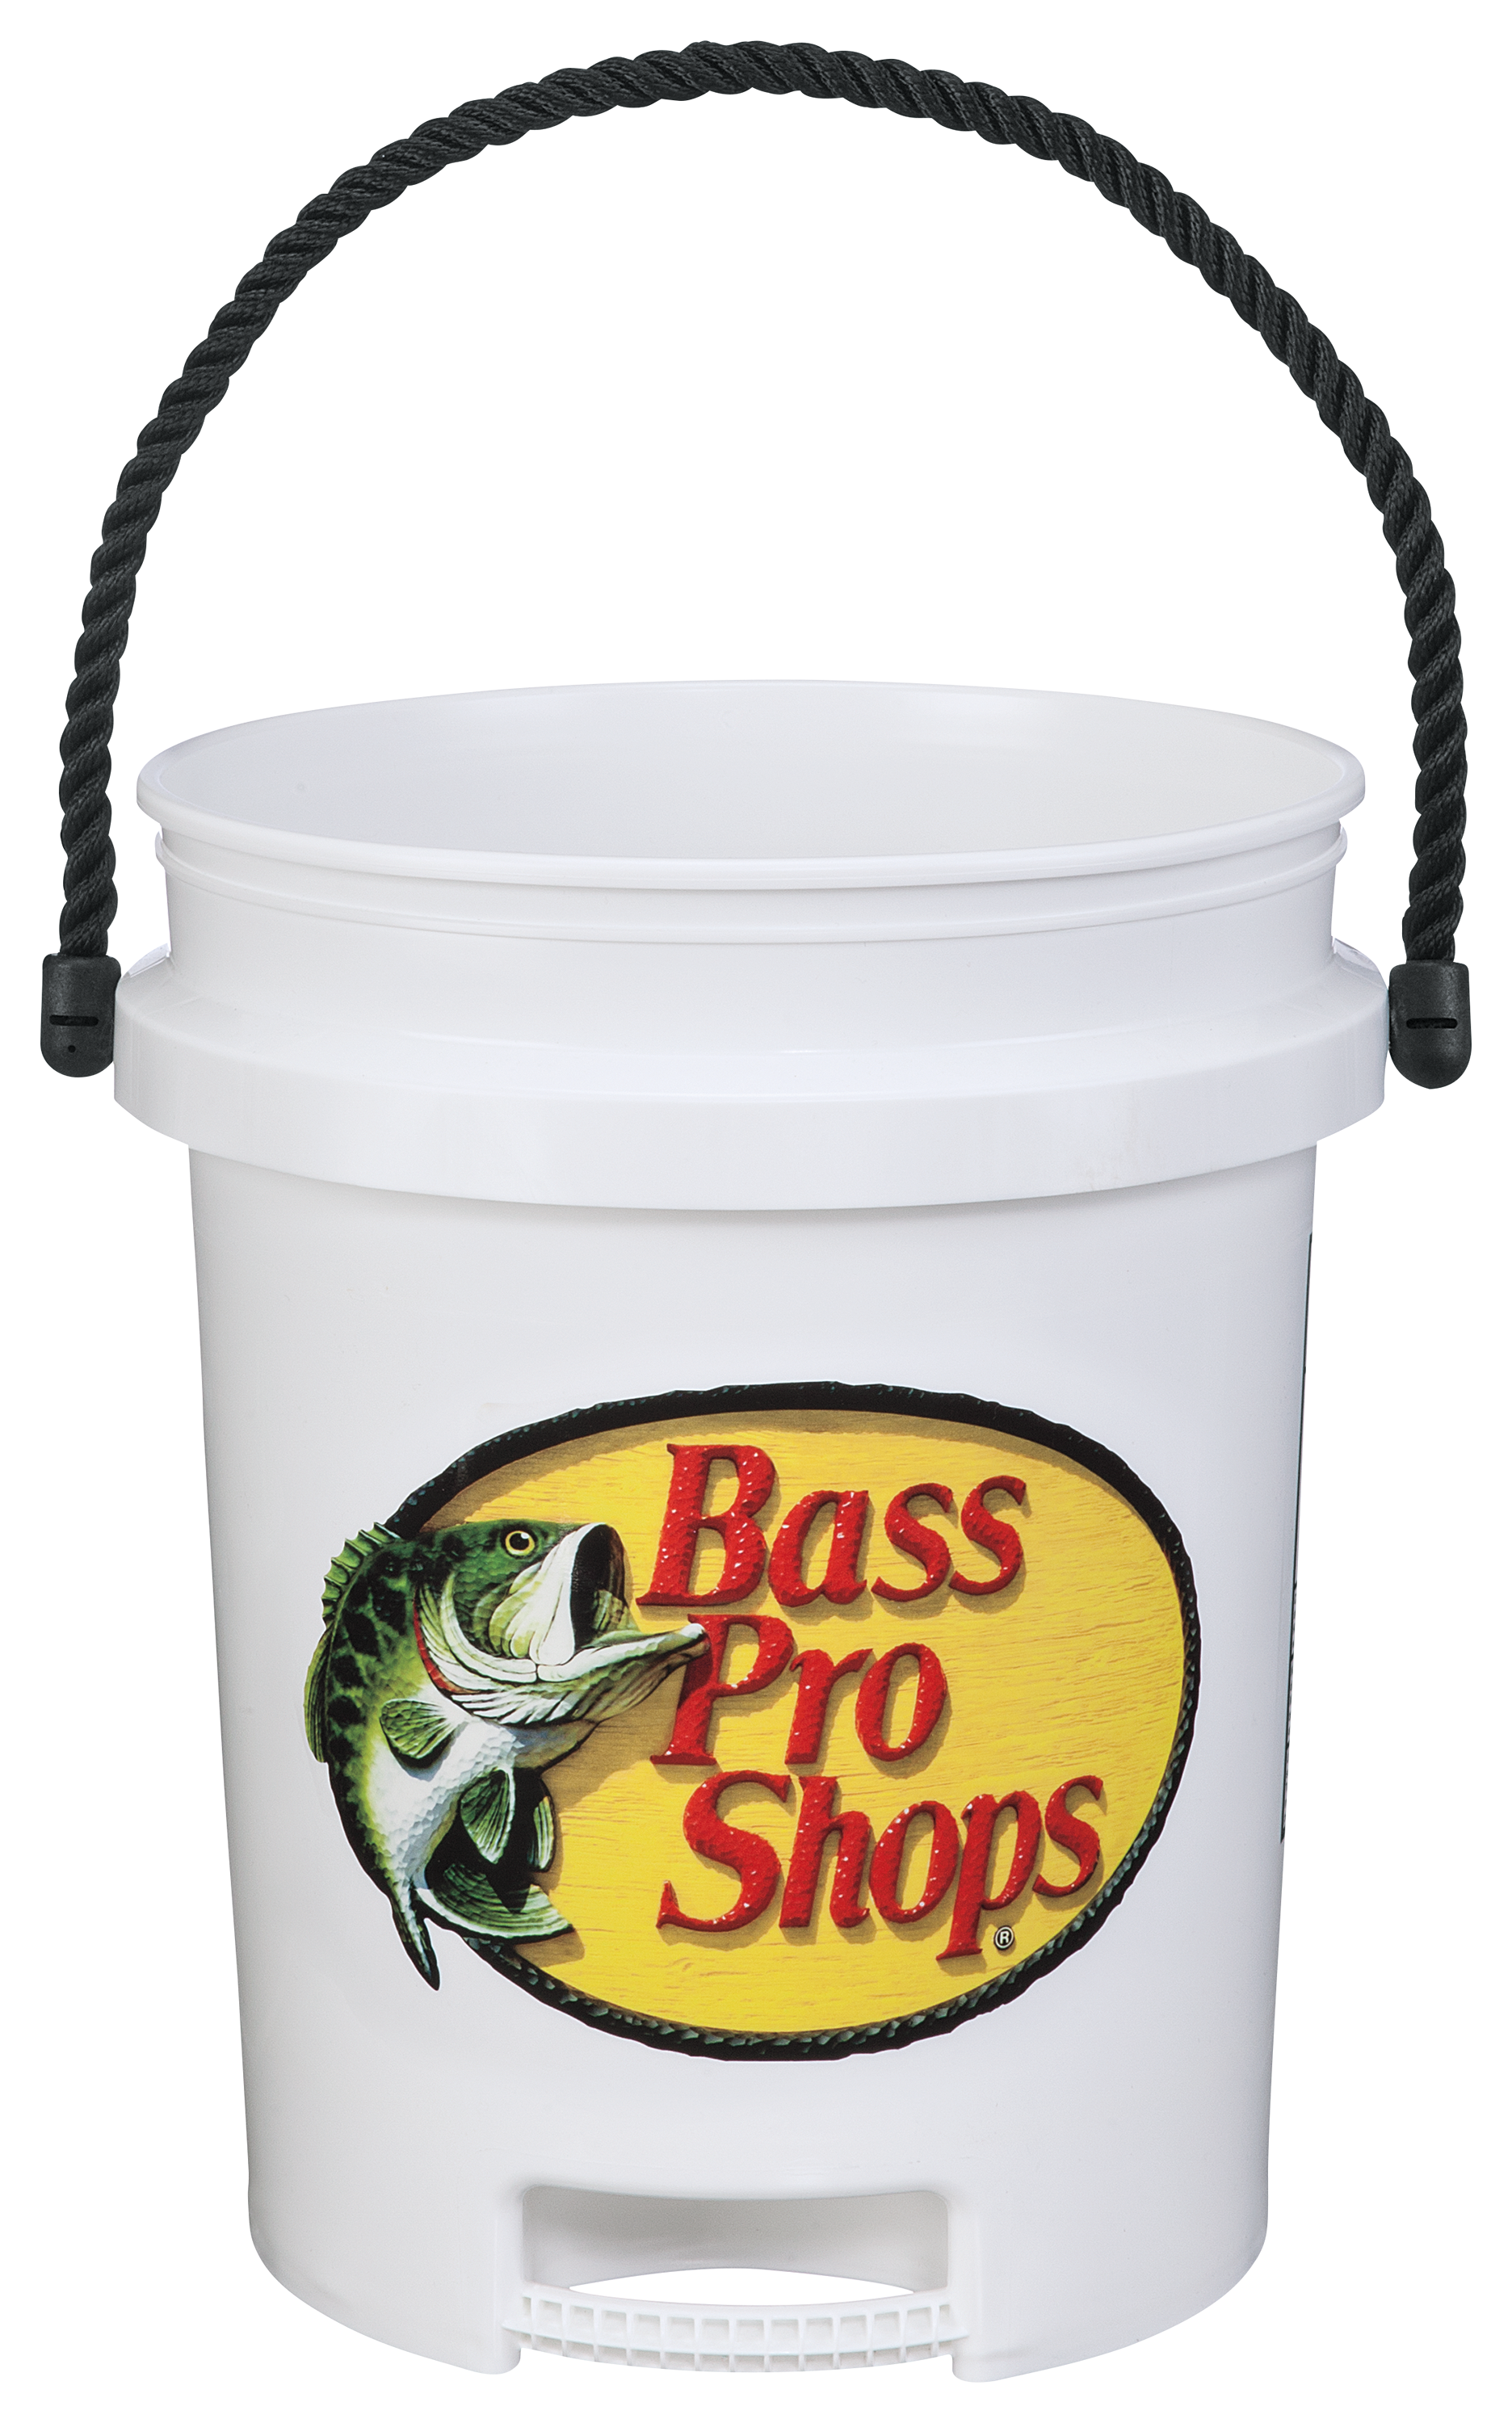 $4 Plastics from Bass Pro Shops 